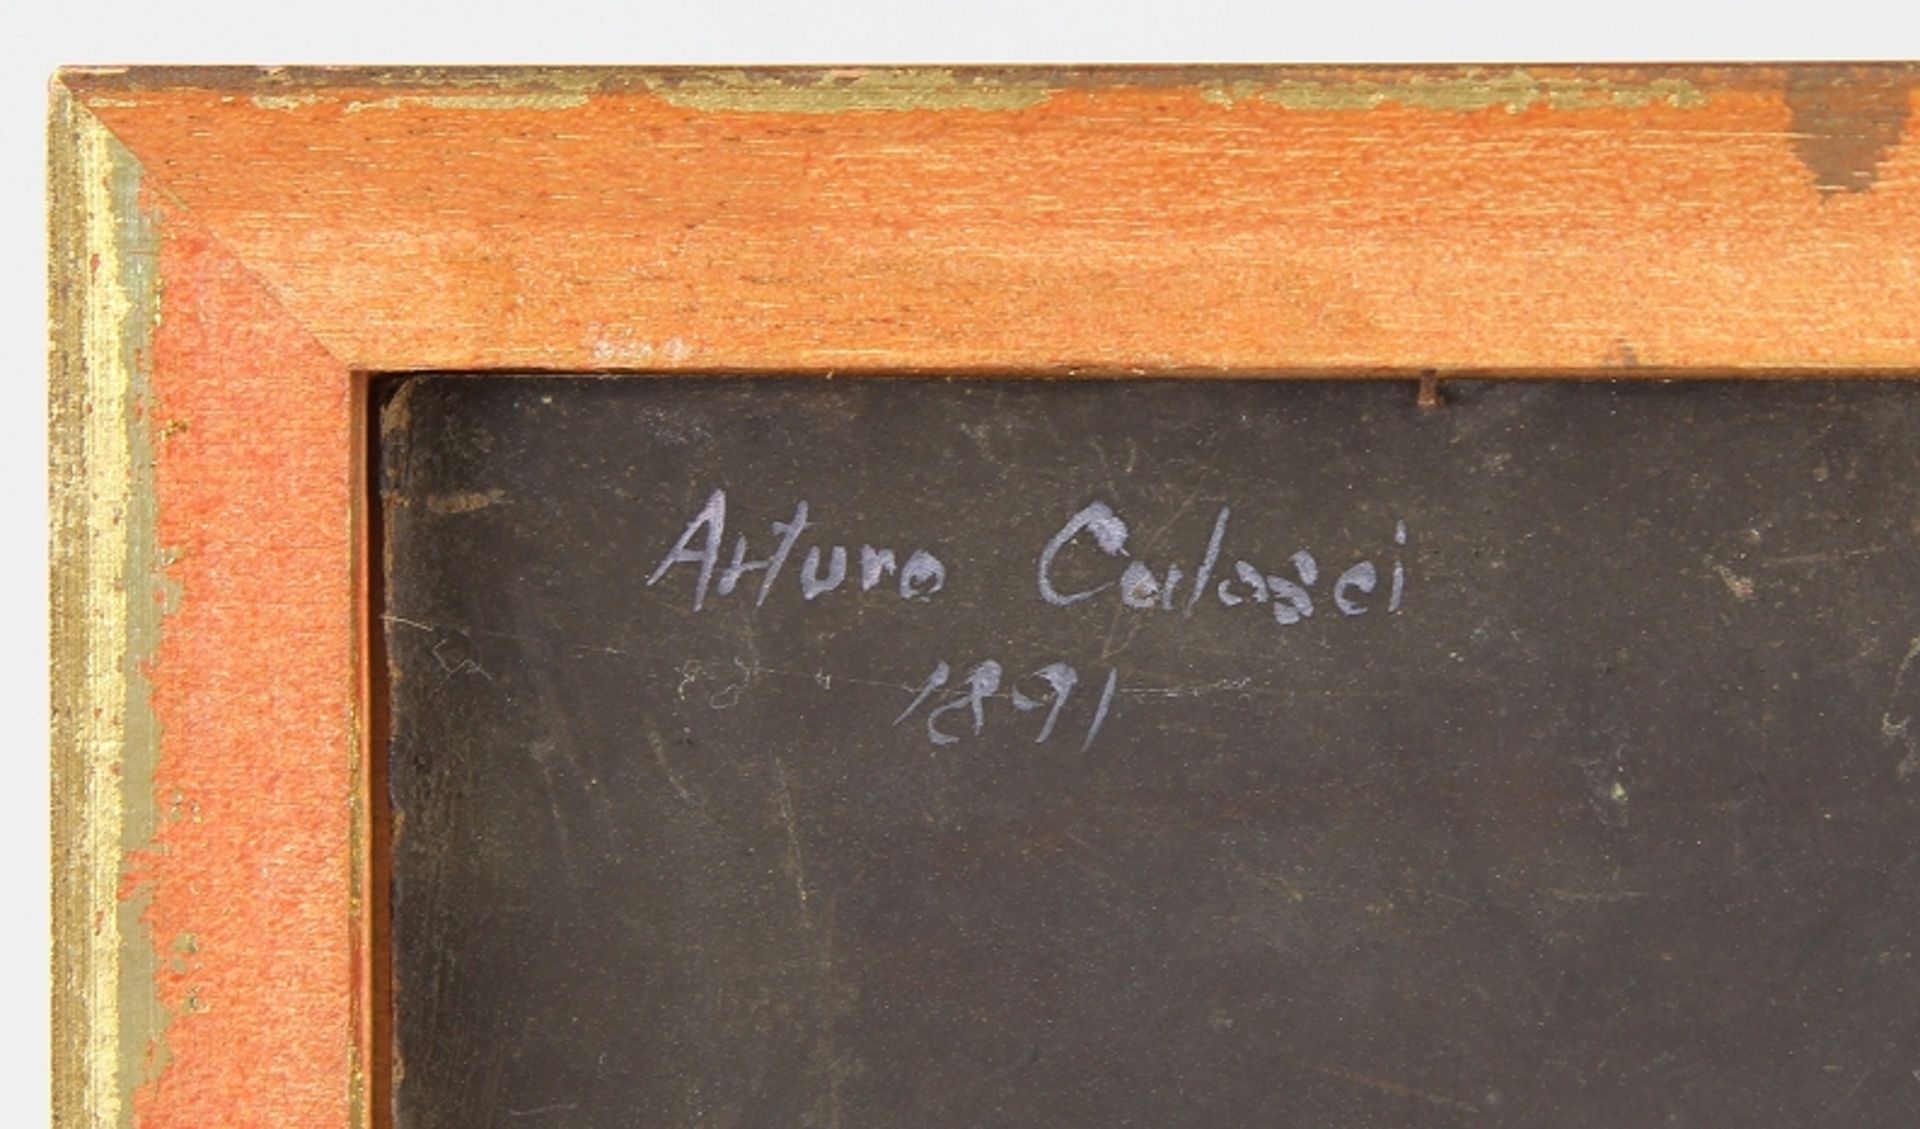 Calosci, Arturo (1855 - 1926 Florenz) - Image 4 of 5